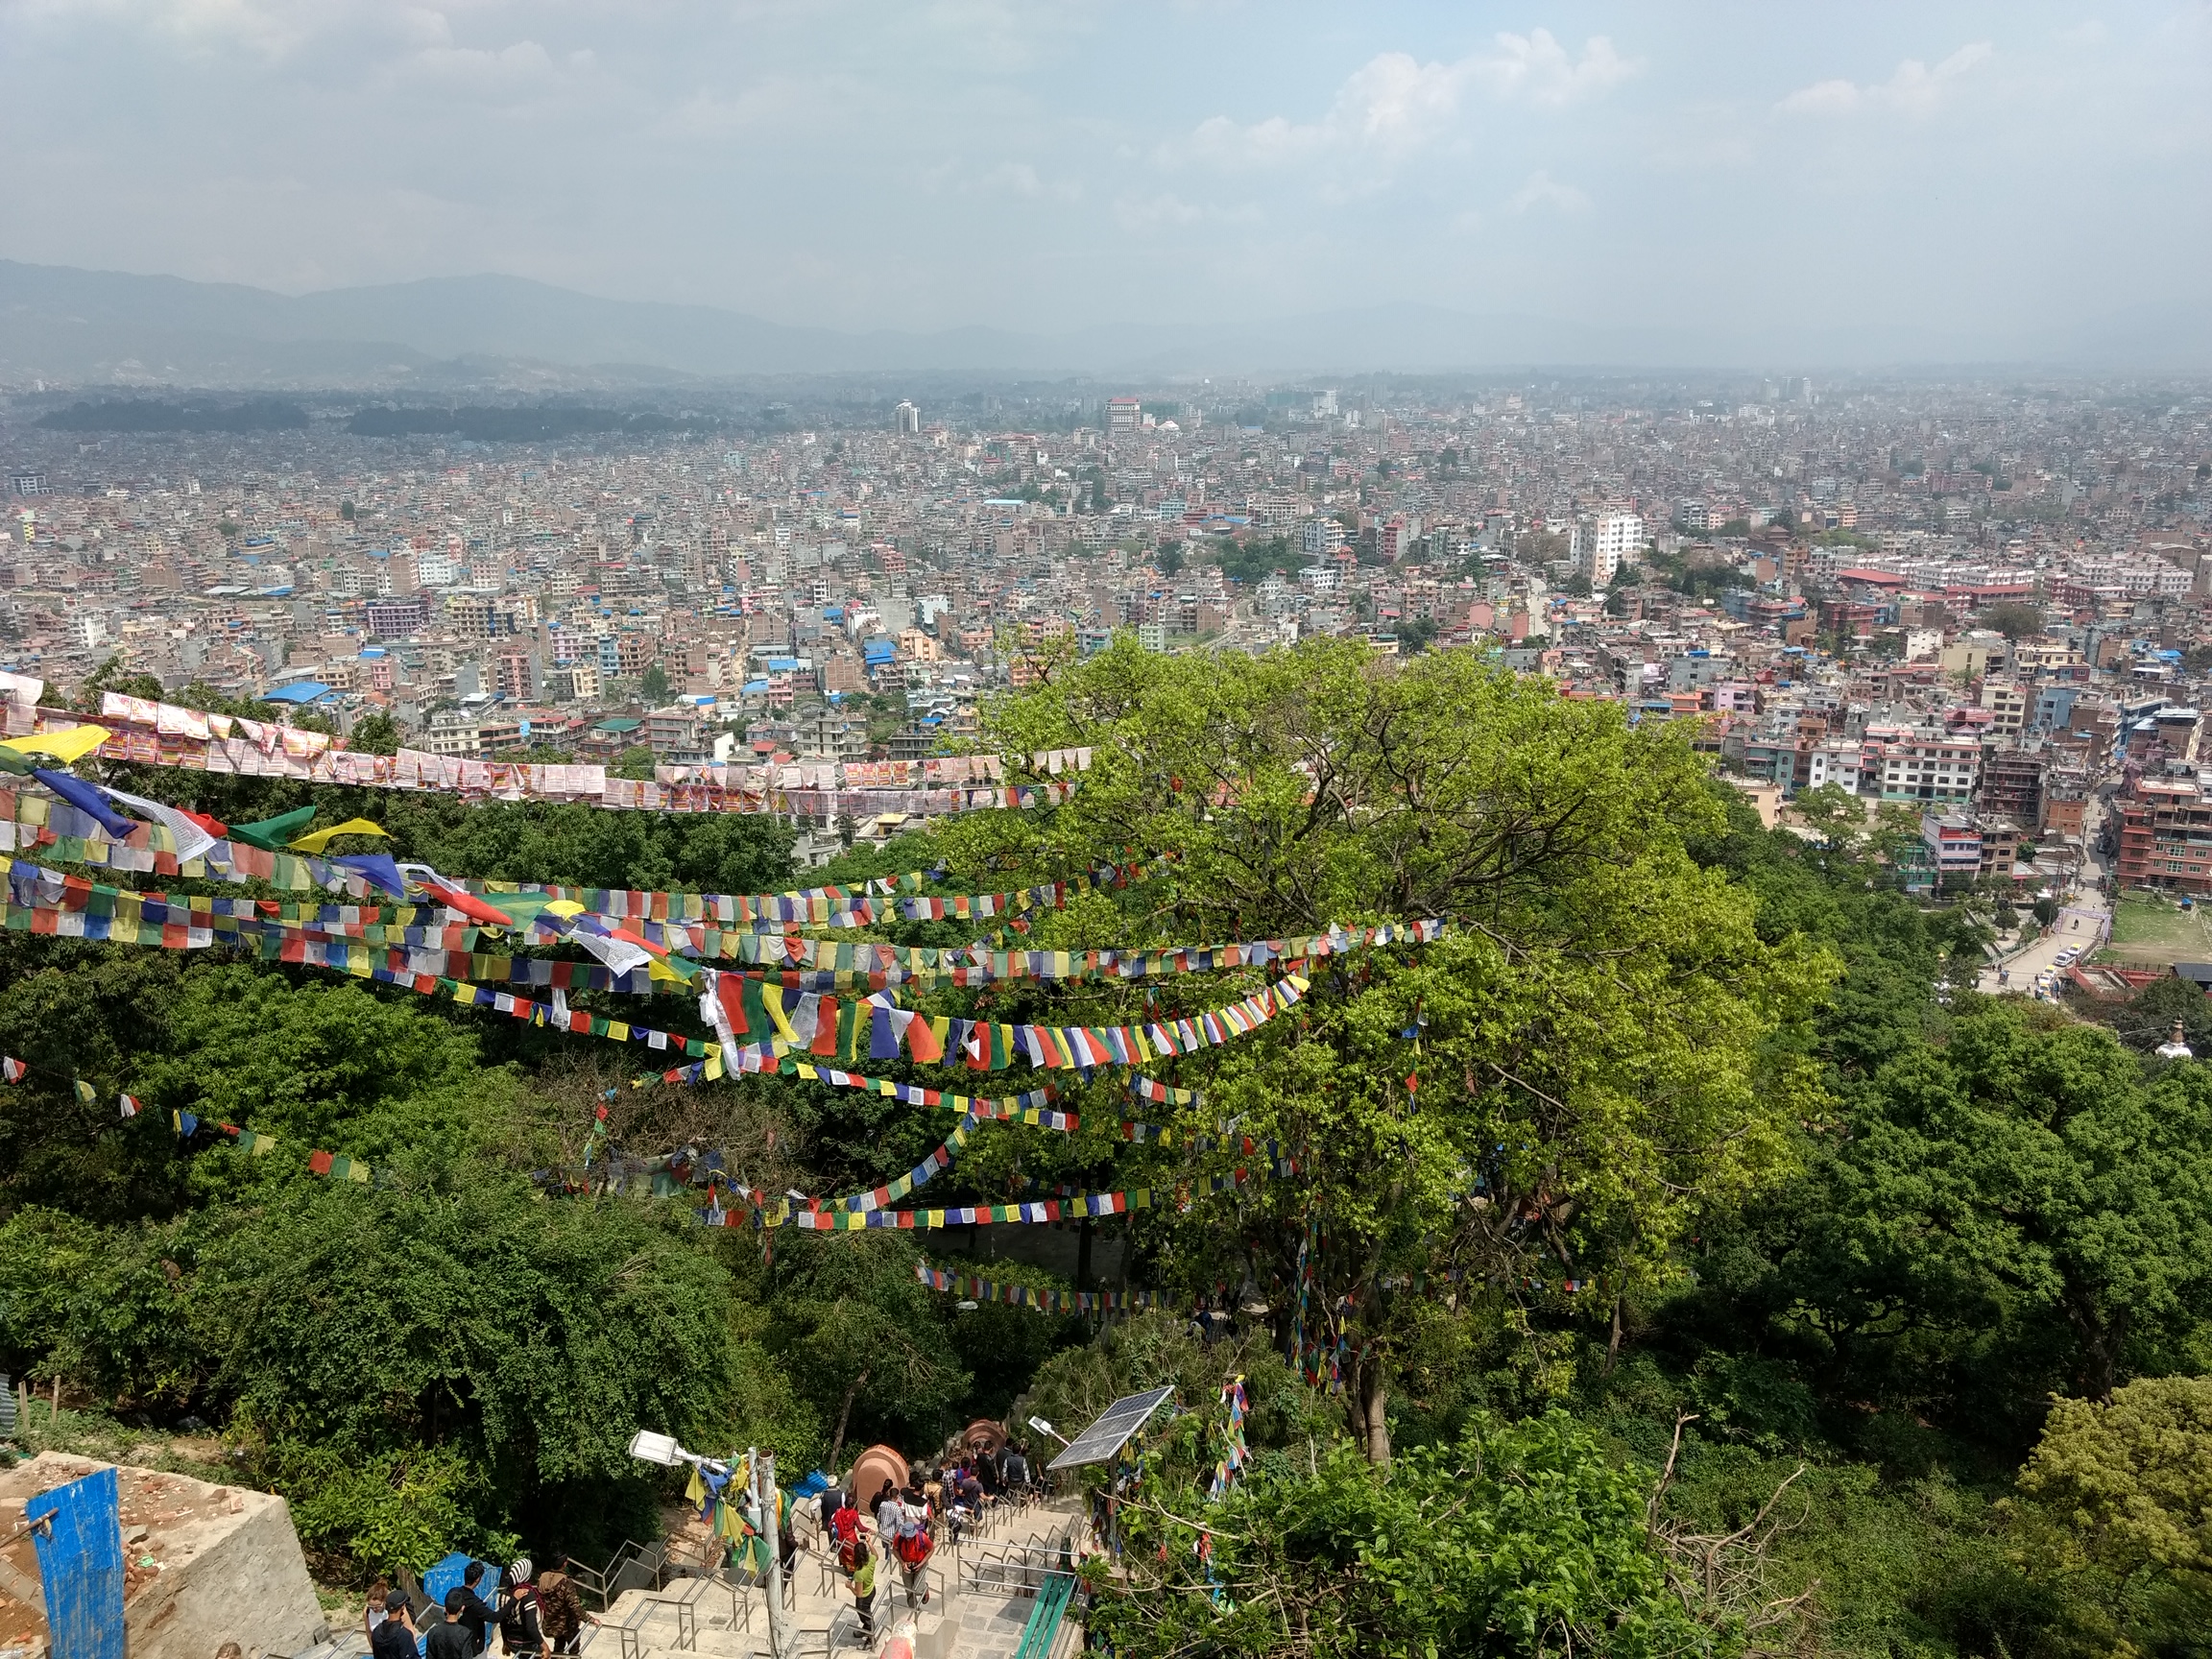 Swayambhunath Stupa or the Monkey Temple in Kathmandu